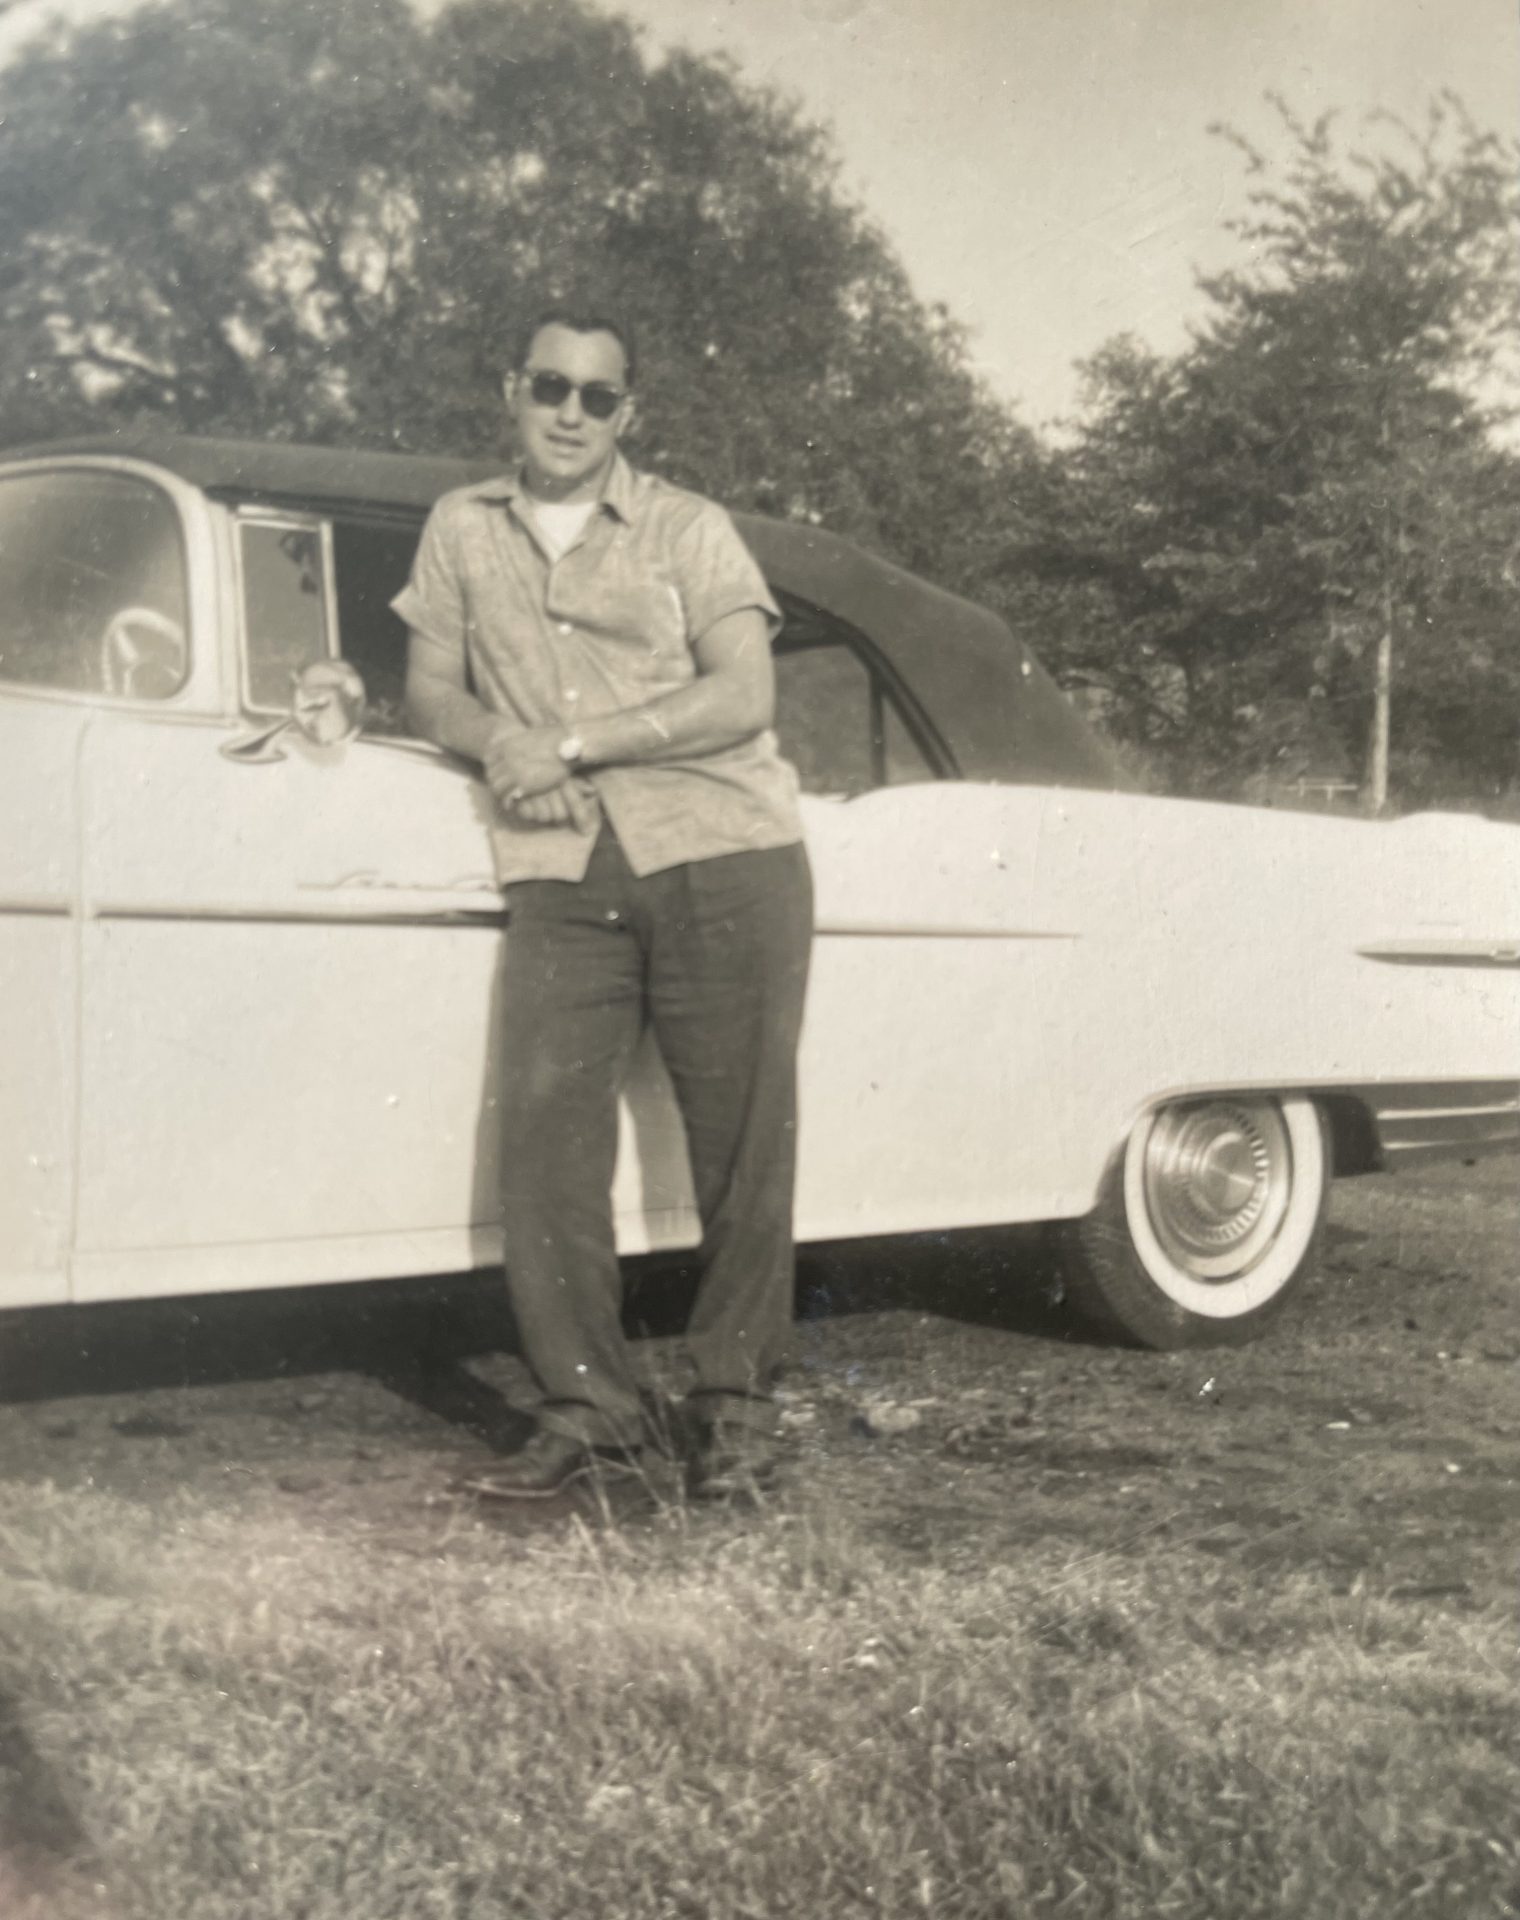 Dad loved his Pontiac!